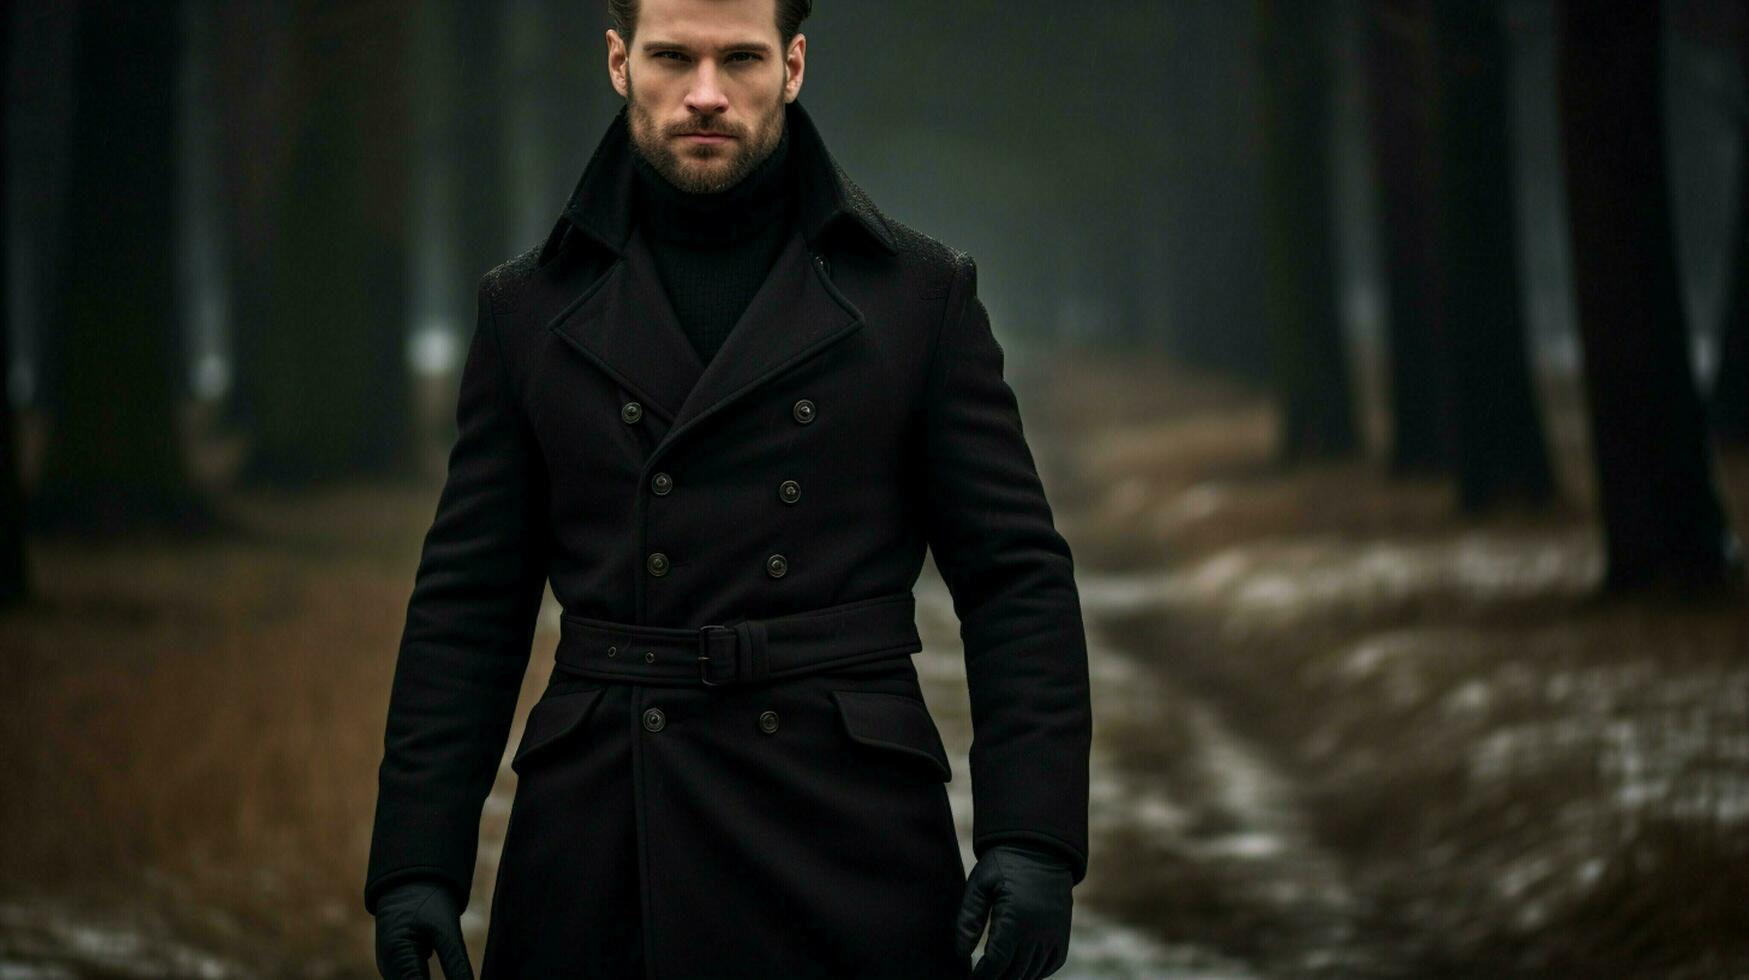 de moda hombres invierno Saco oscuro lana elegancia foto